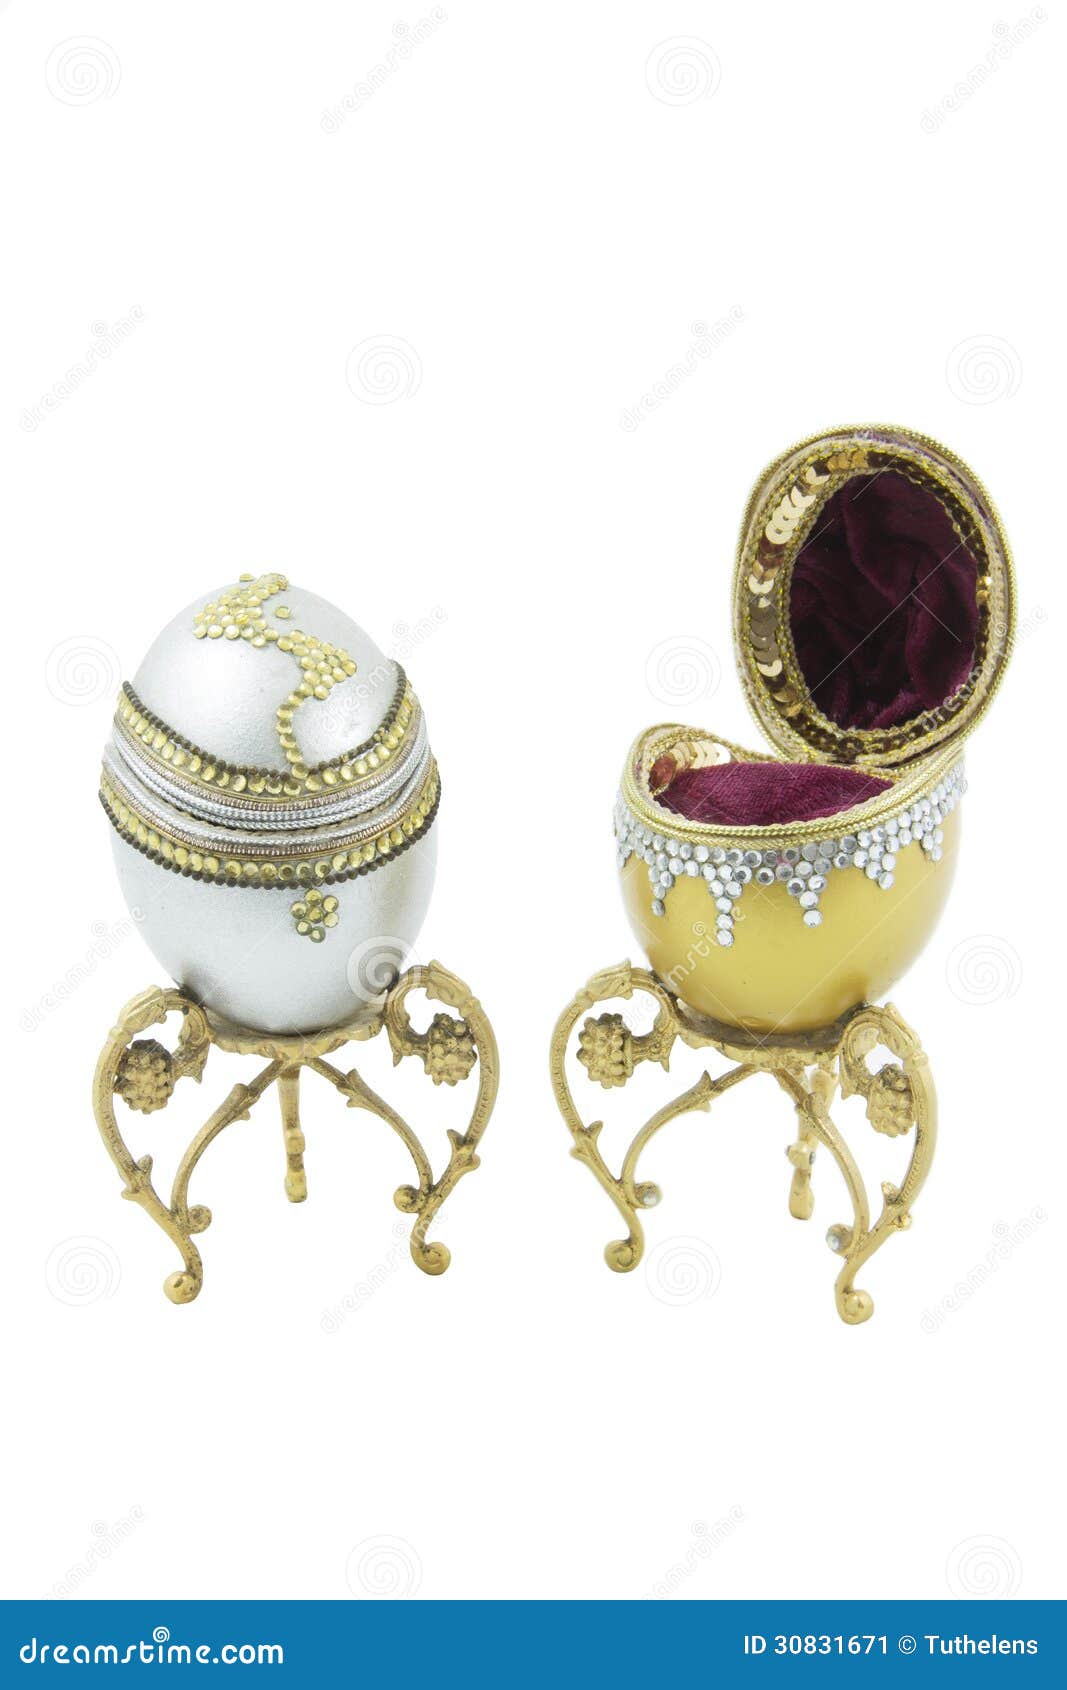 Stock Image: Eggs Wedding Ring Handmade Storage